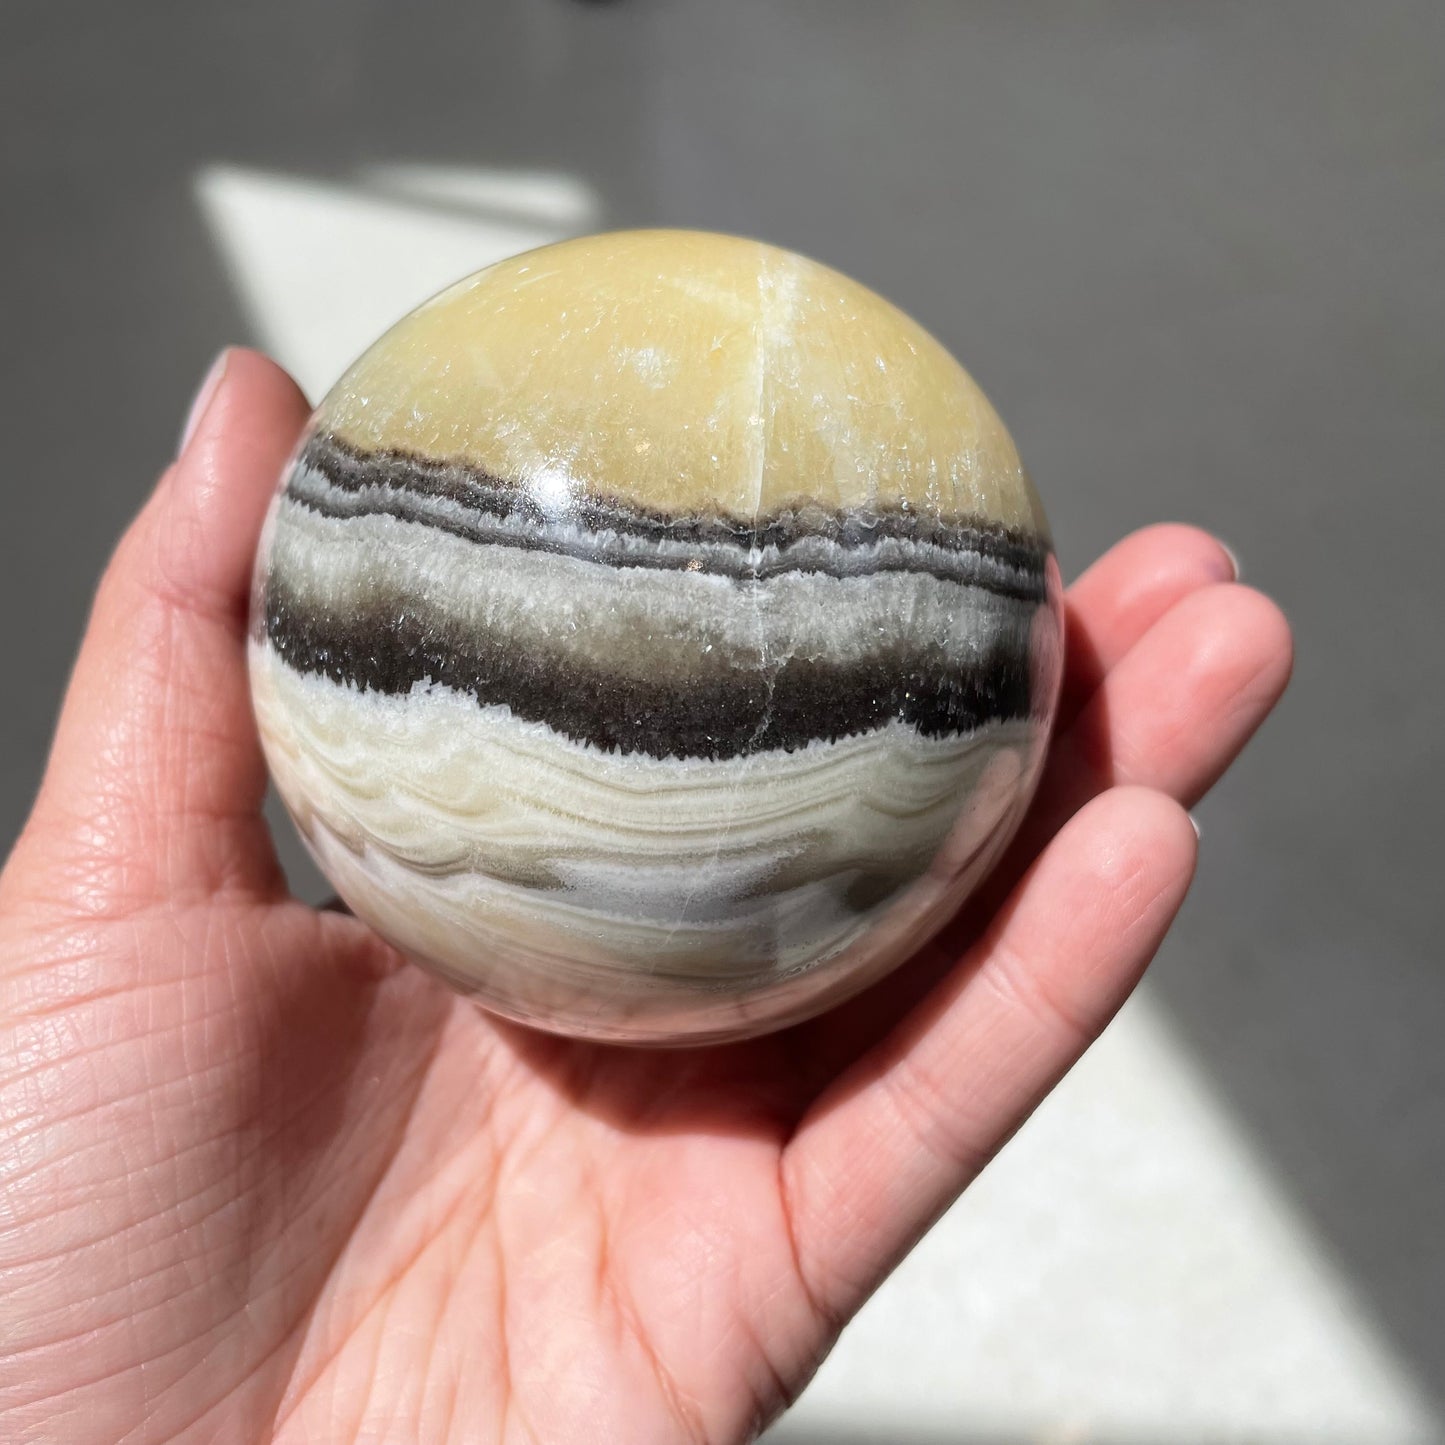 Zebra calcite sphere - Rivendell Shop